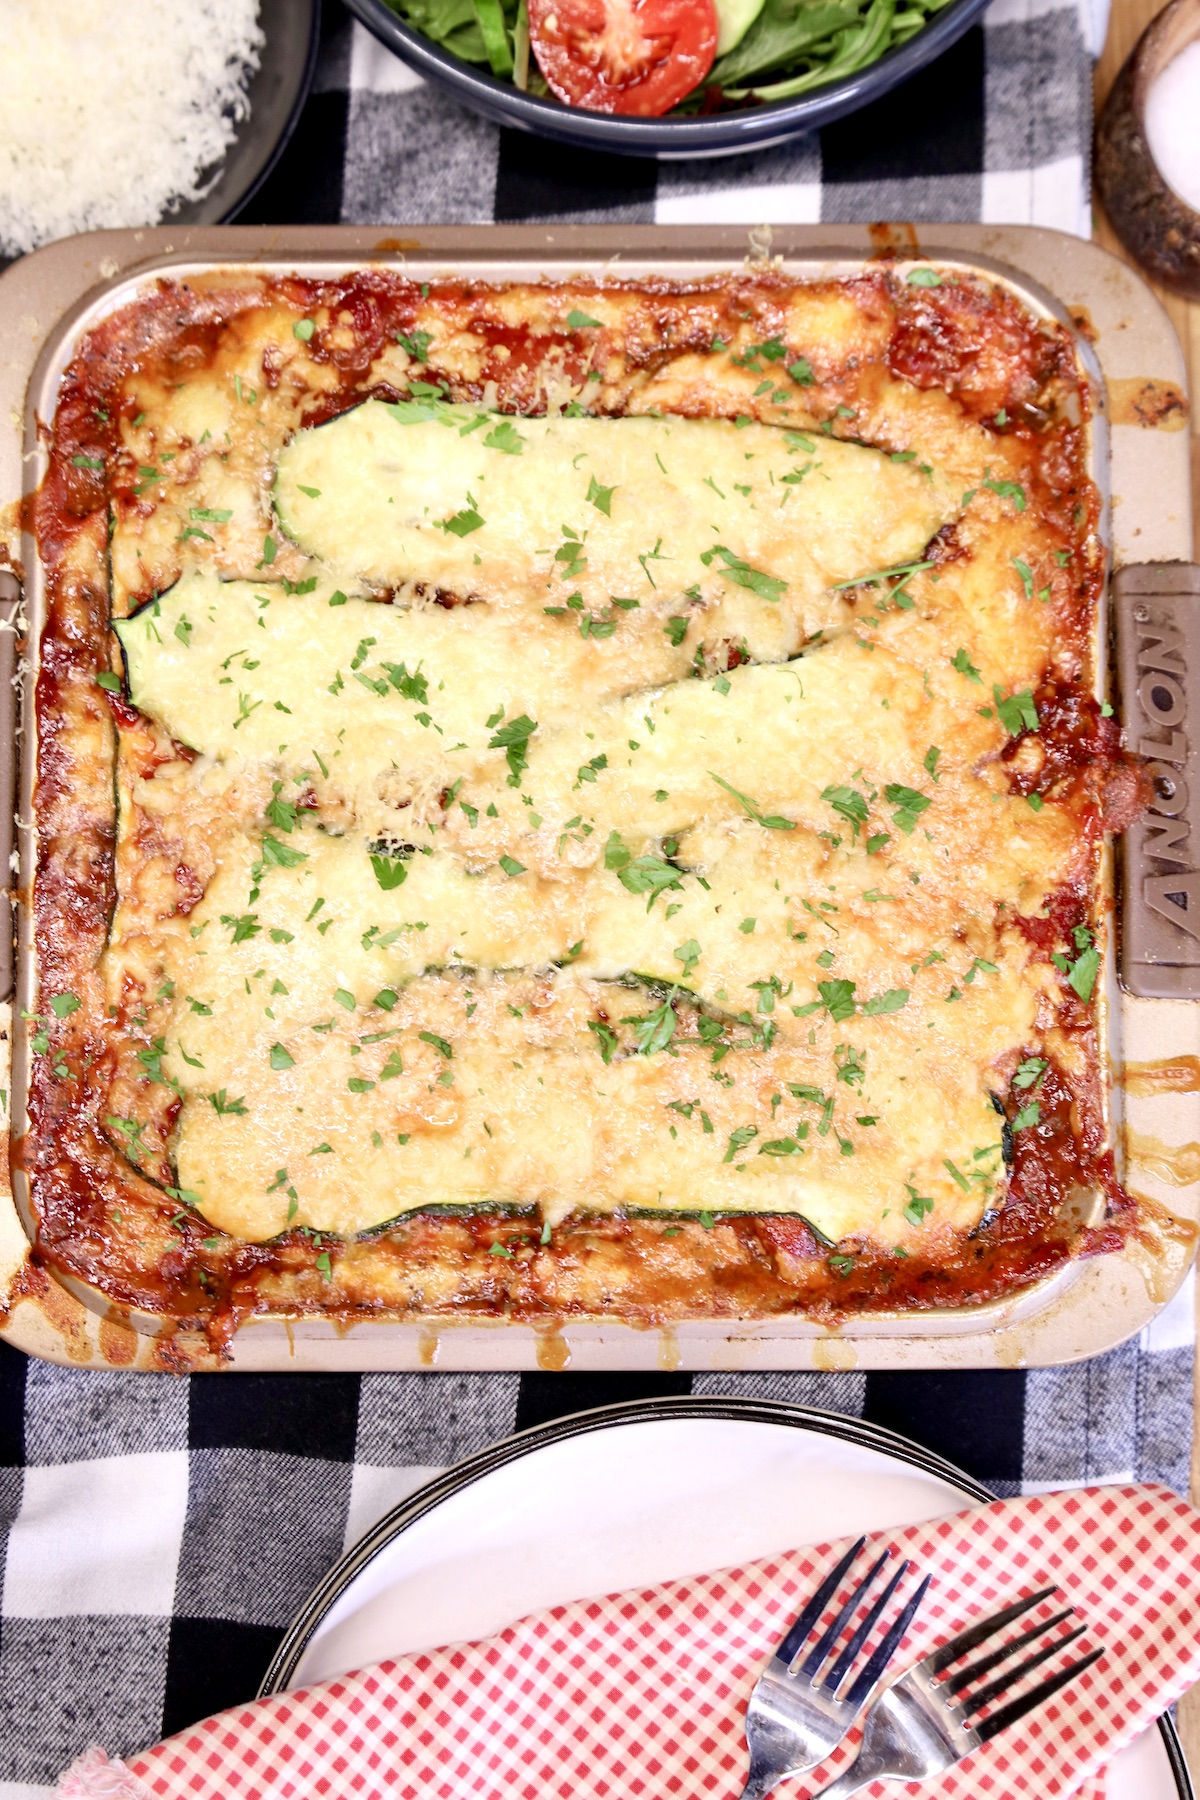 Pan of lasagna.